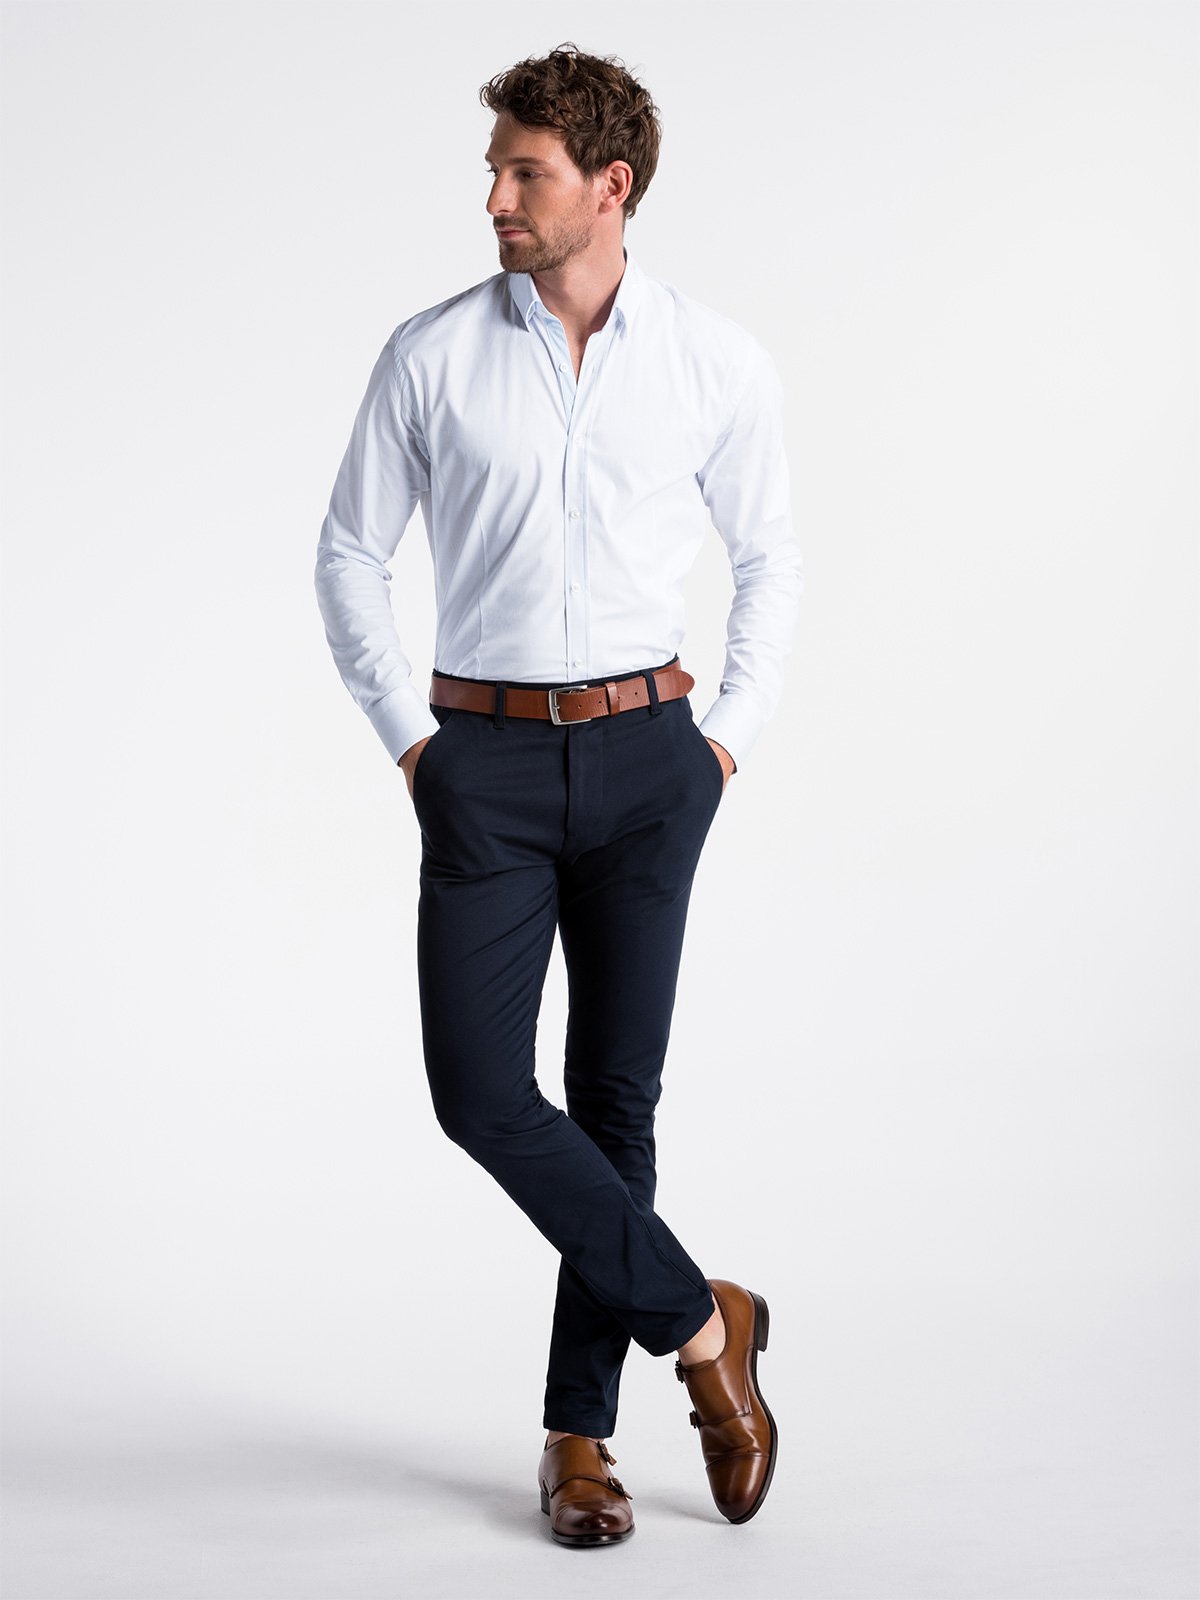 Men's elegant shirt with long sleeves K496 - white | MODONE wholesale ...